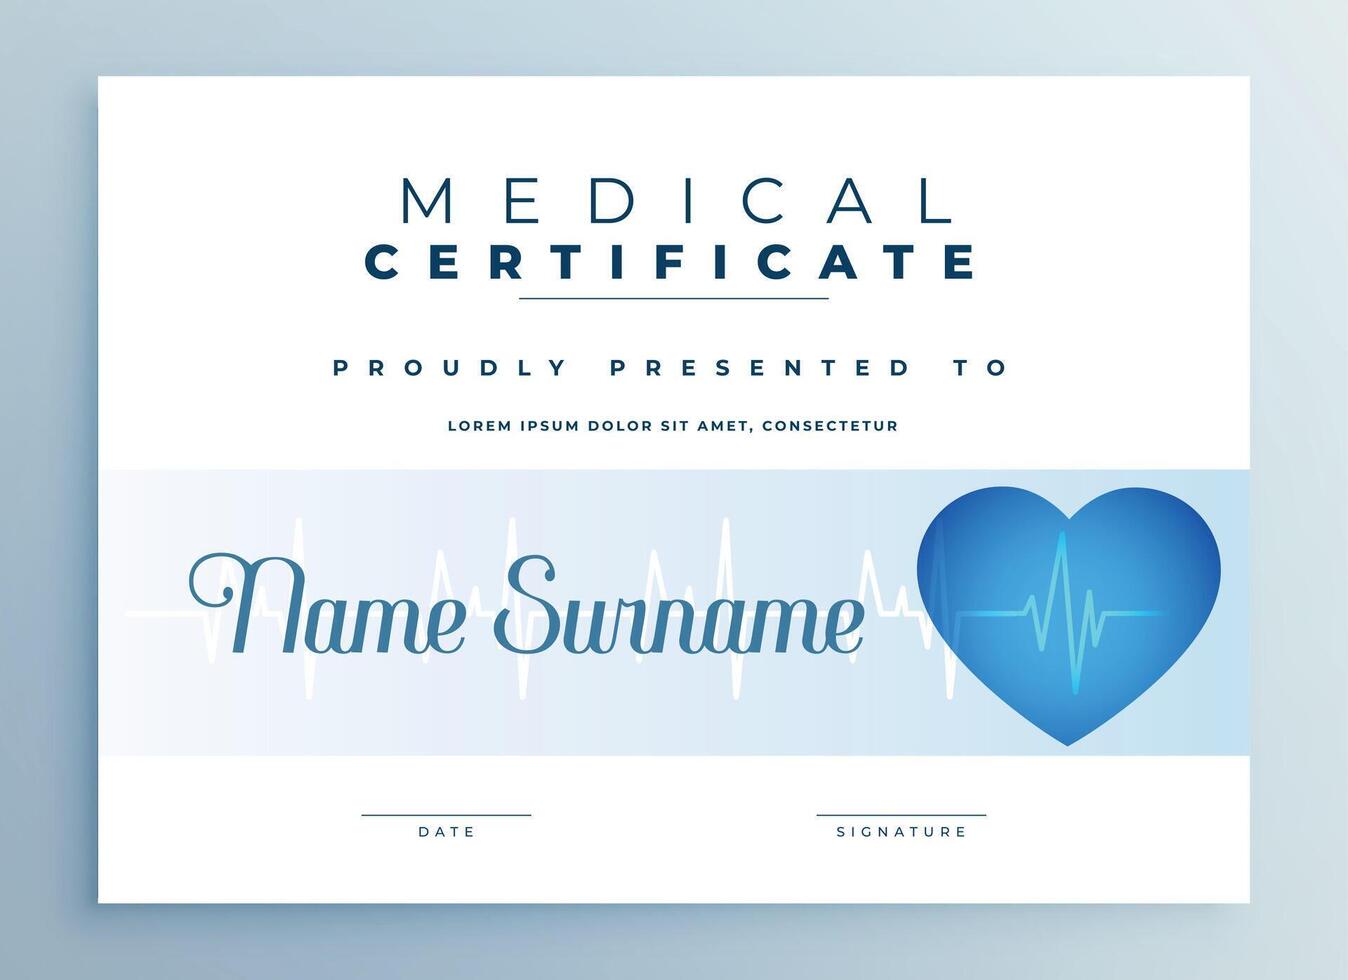 professional medical certificate or diploma template design success vector